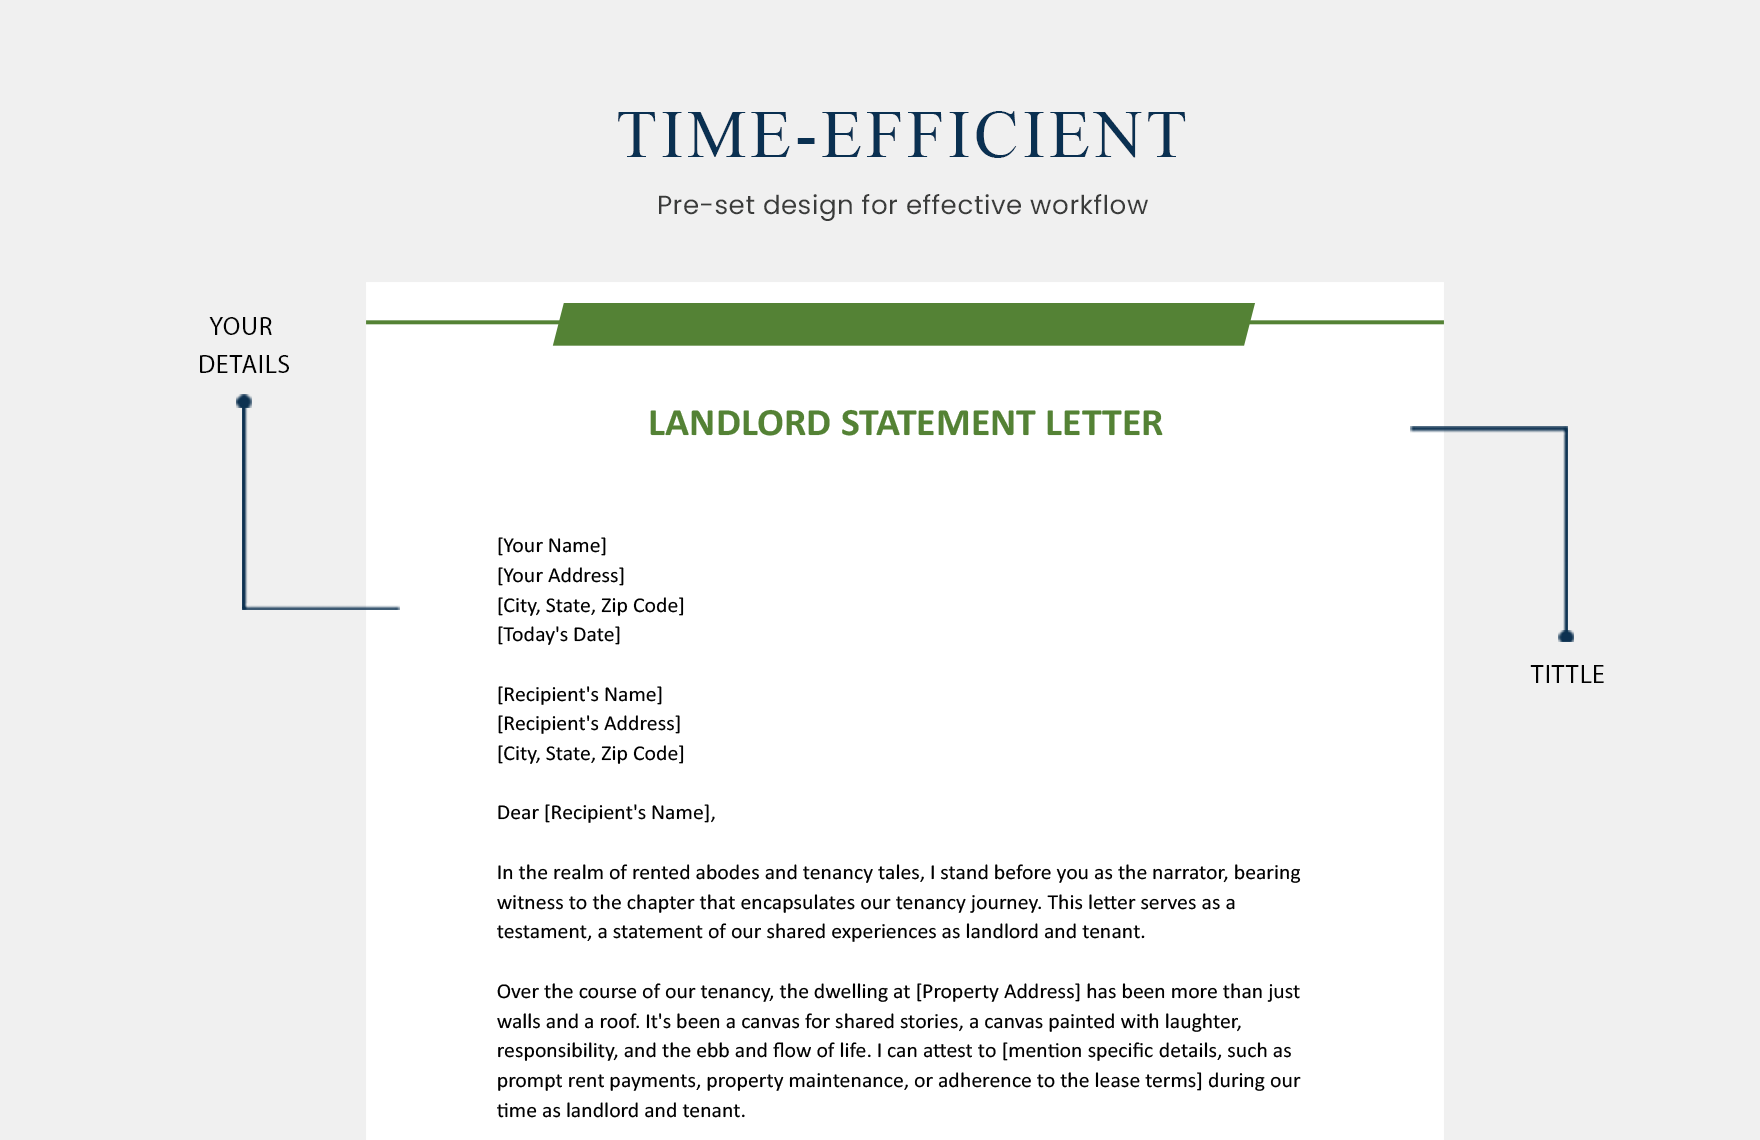 Landlord Statement Letter